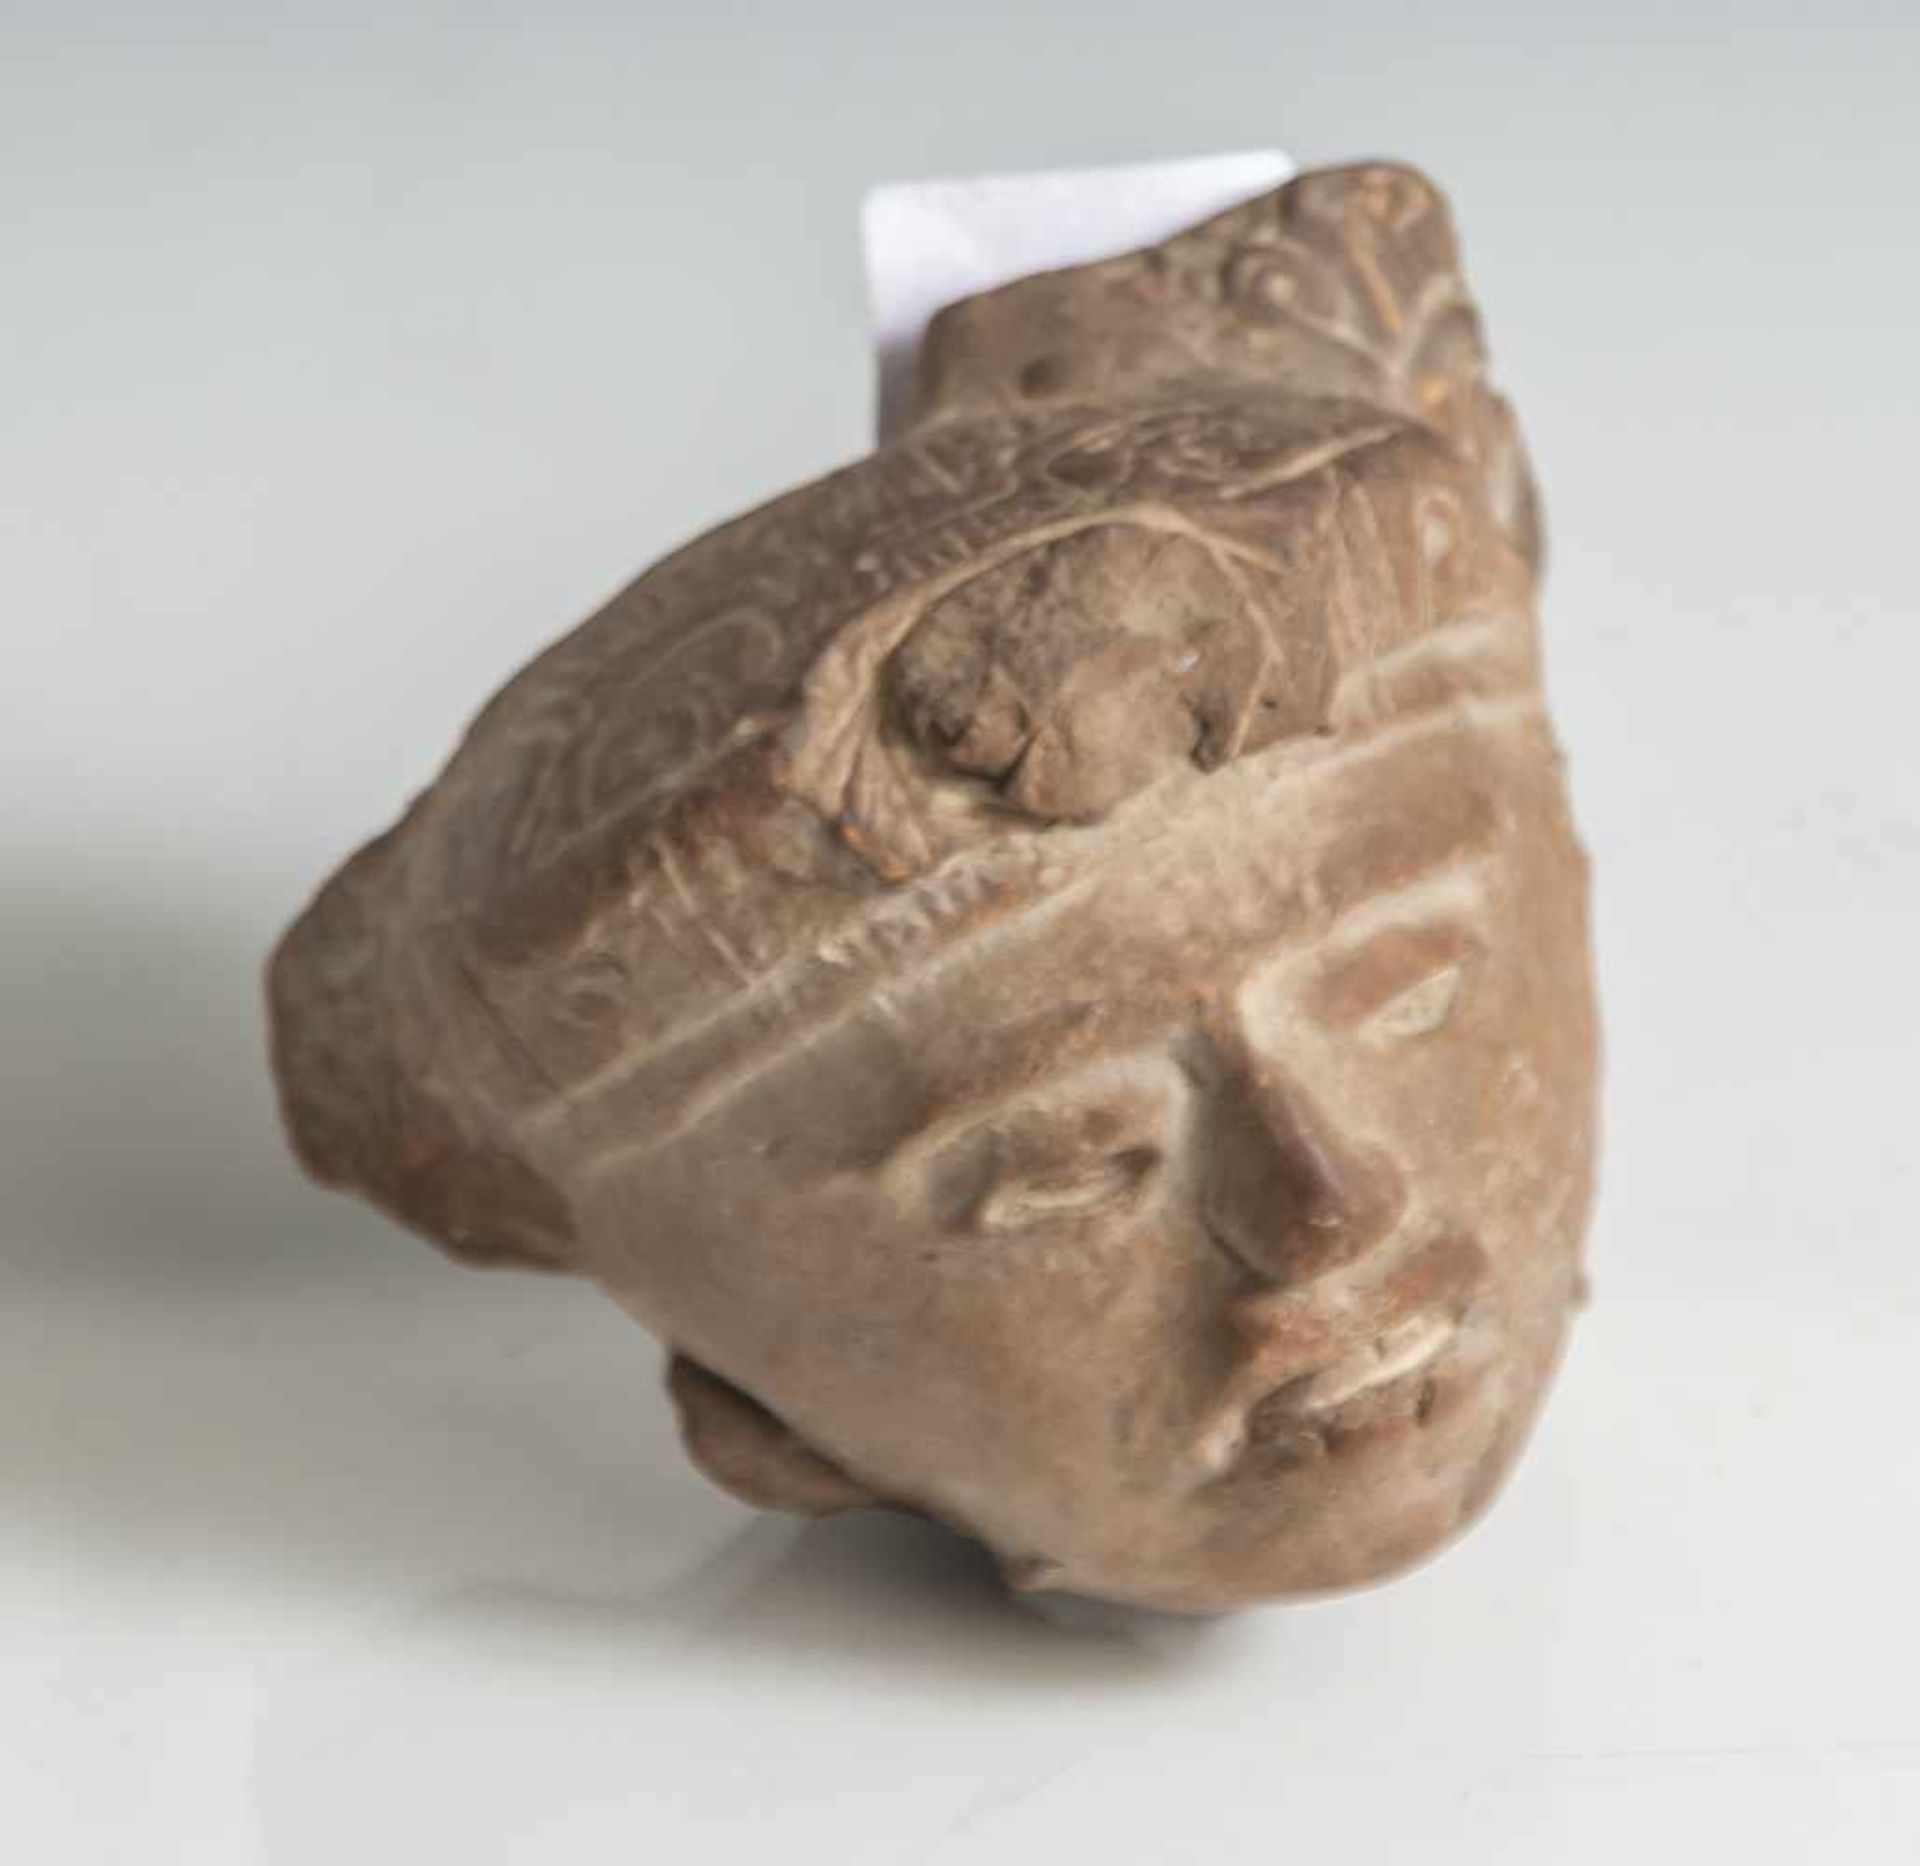 Tonfragment eines Kopfes, Maya-Kultur, wohl 250-600 n. Chri. H. ca. 8 cm, Br. ca. 9 cm.